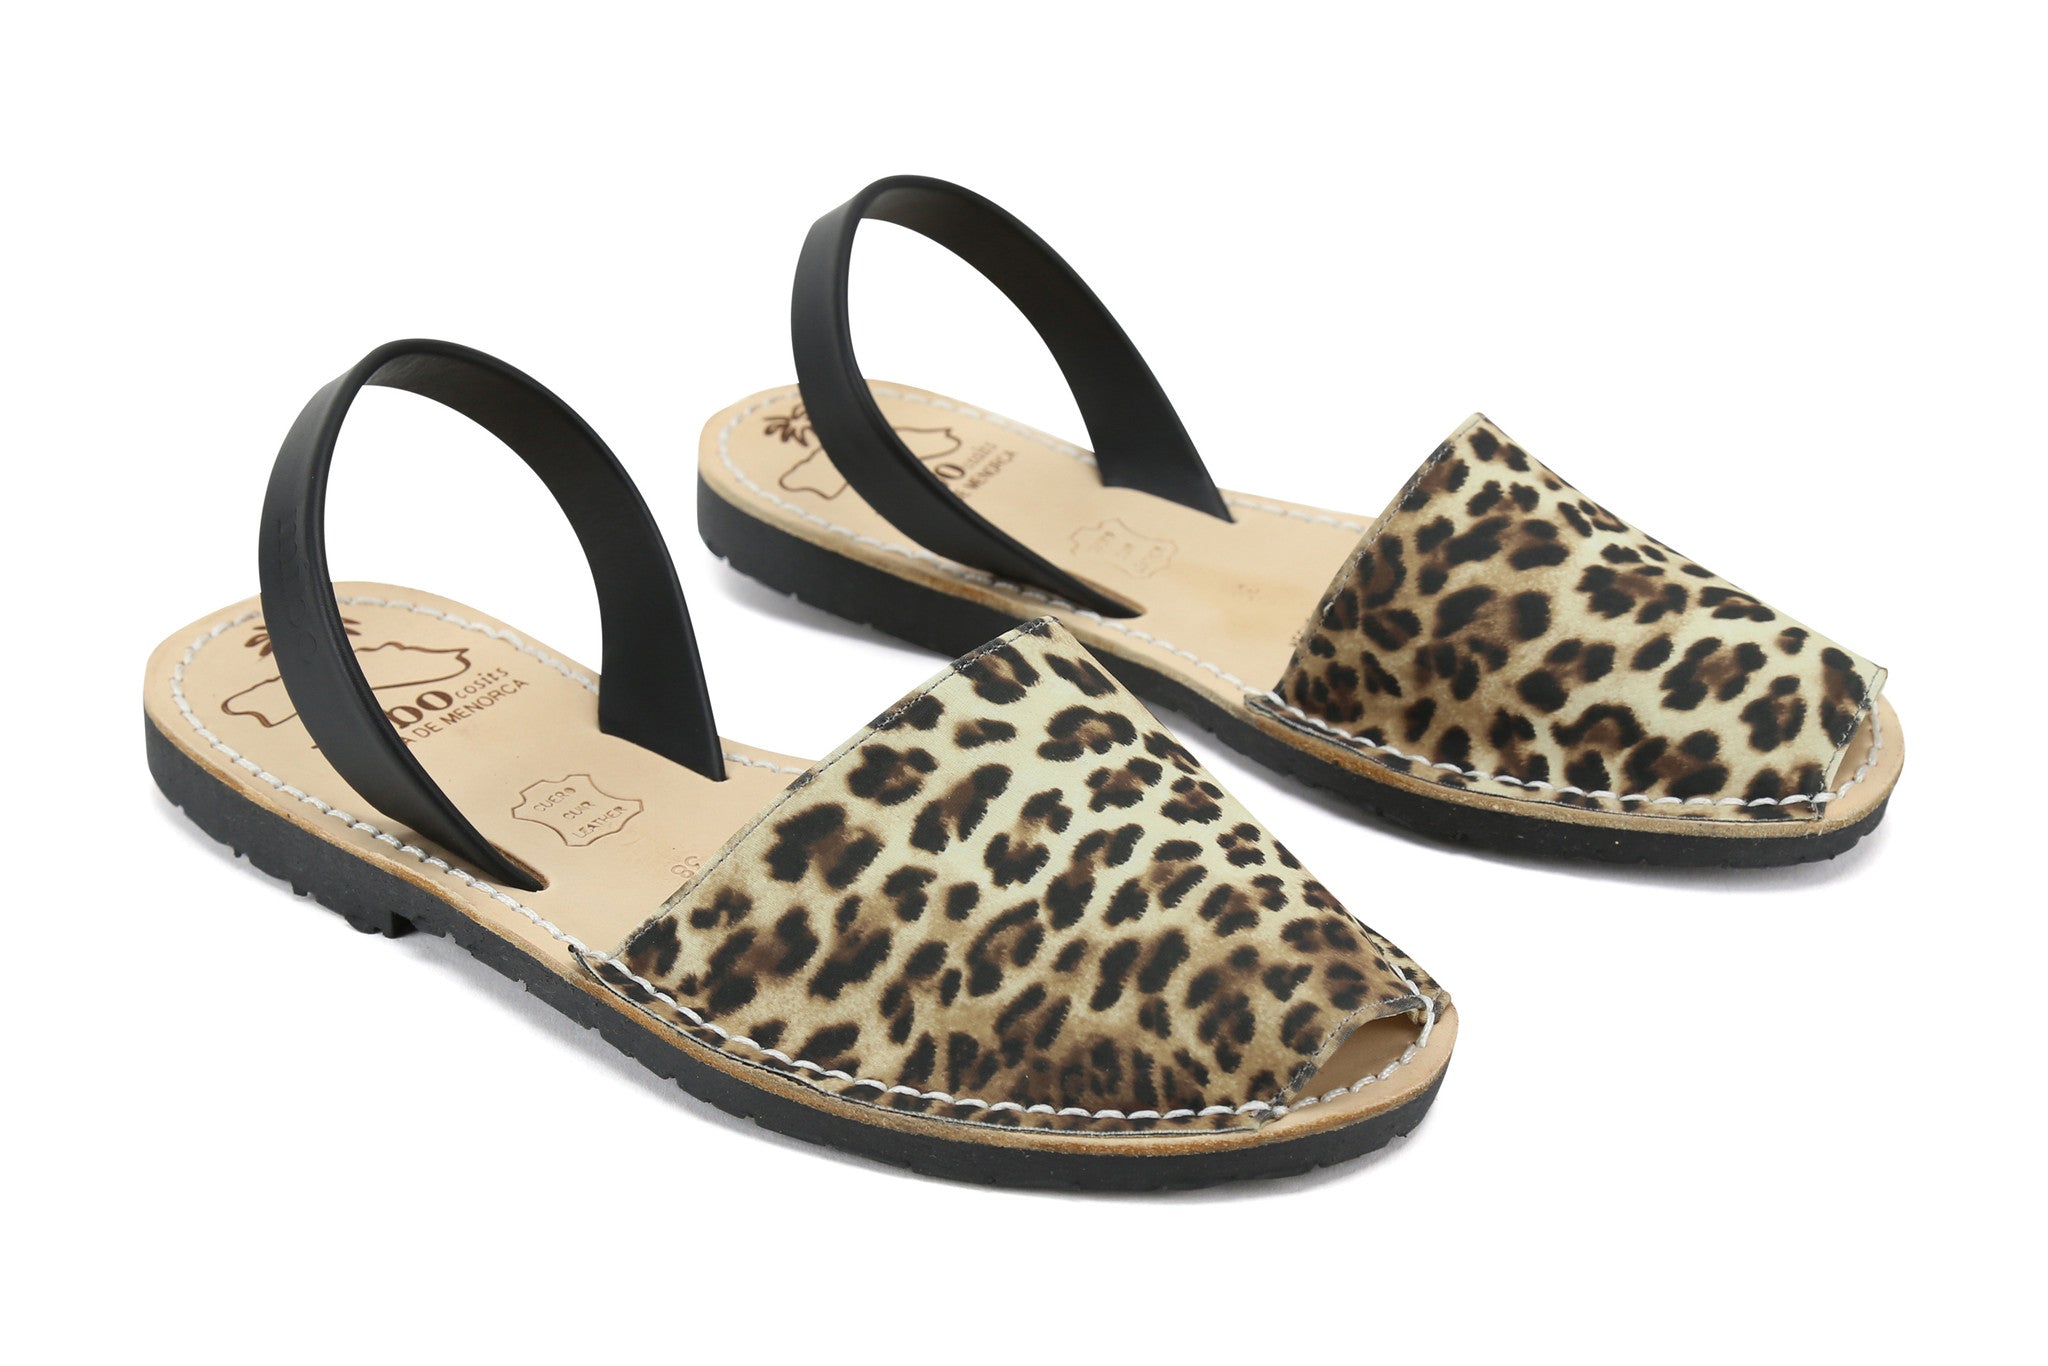 HSMQHJWE Womens Gladiator Sandals Dressy Summer Flat Leopard Sandals Ladies  Comfortable Boho Beach Sandals Casual Wide Width Gold Sandals Size 8  HSMQHJWE（Brown,8） - Walmart.com